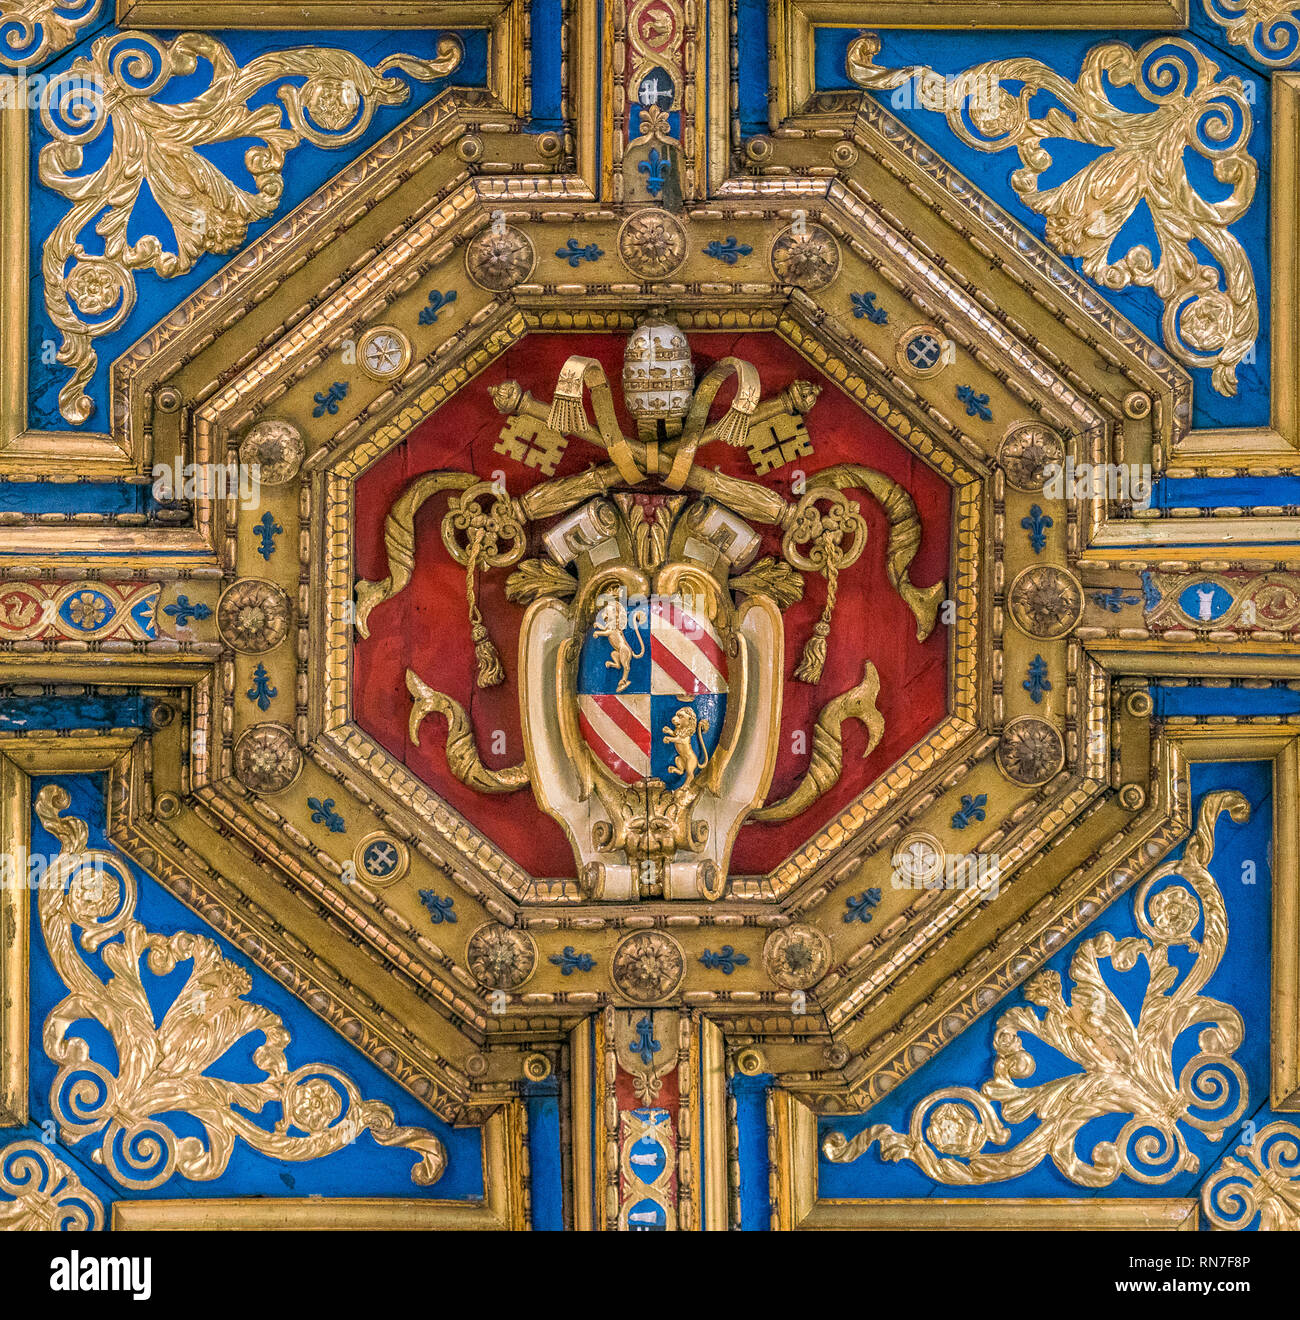 Pius IX. Wappen in der Decke der Kirche von Santo Spirito in Sassia in Rom, Italien. Stockfoto